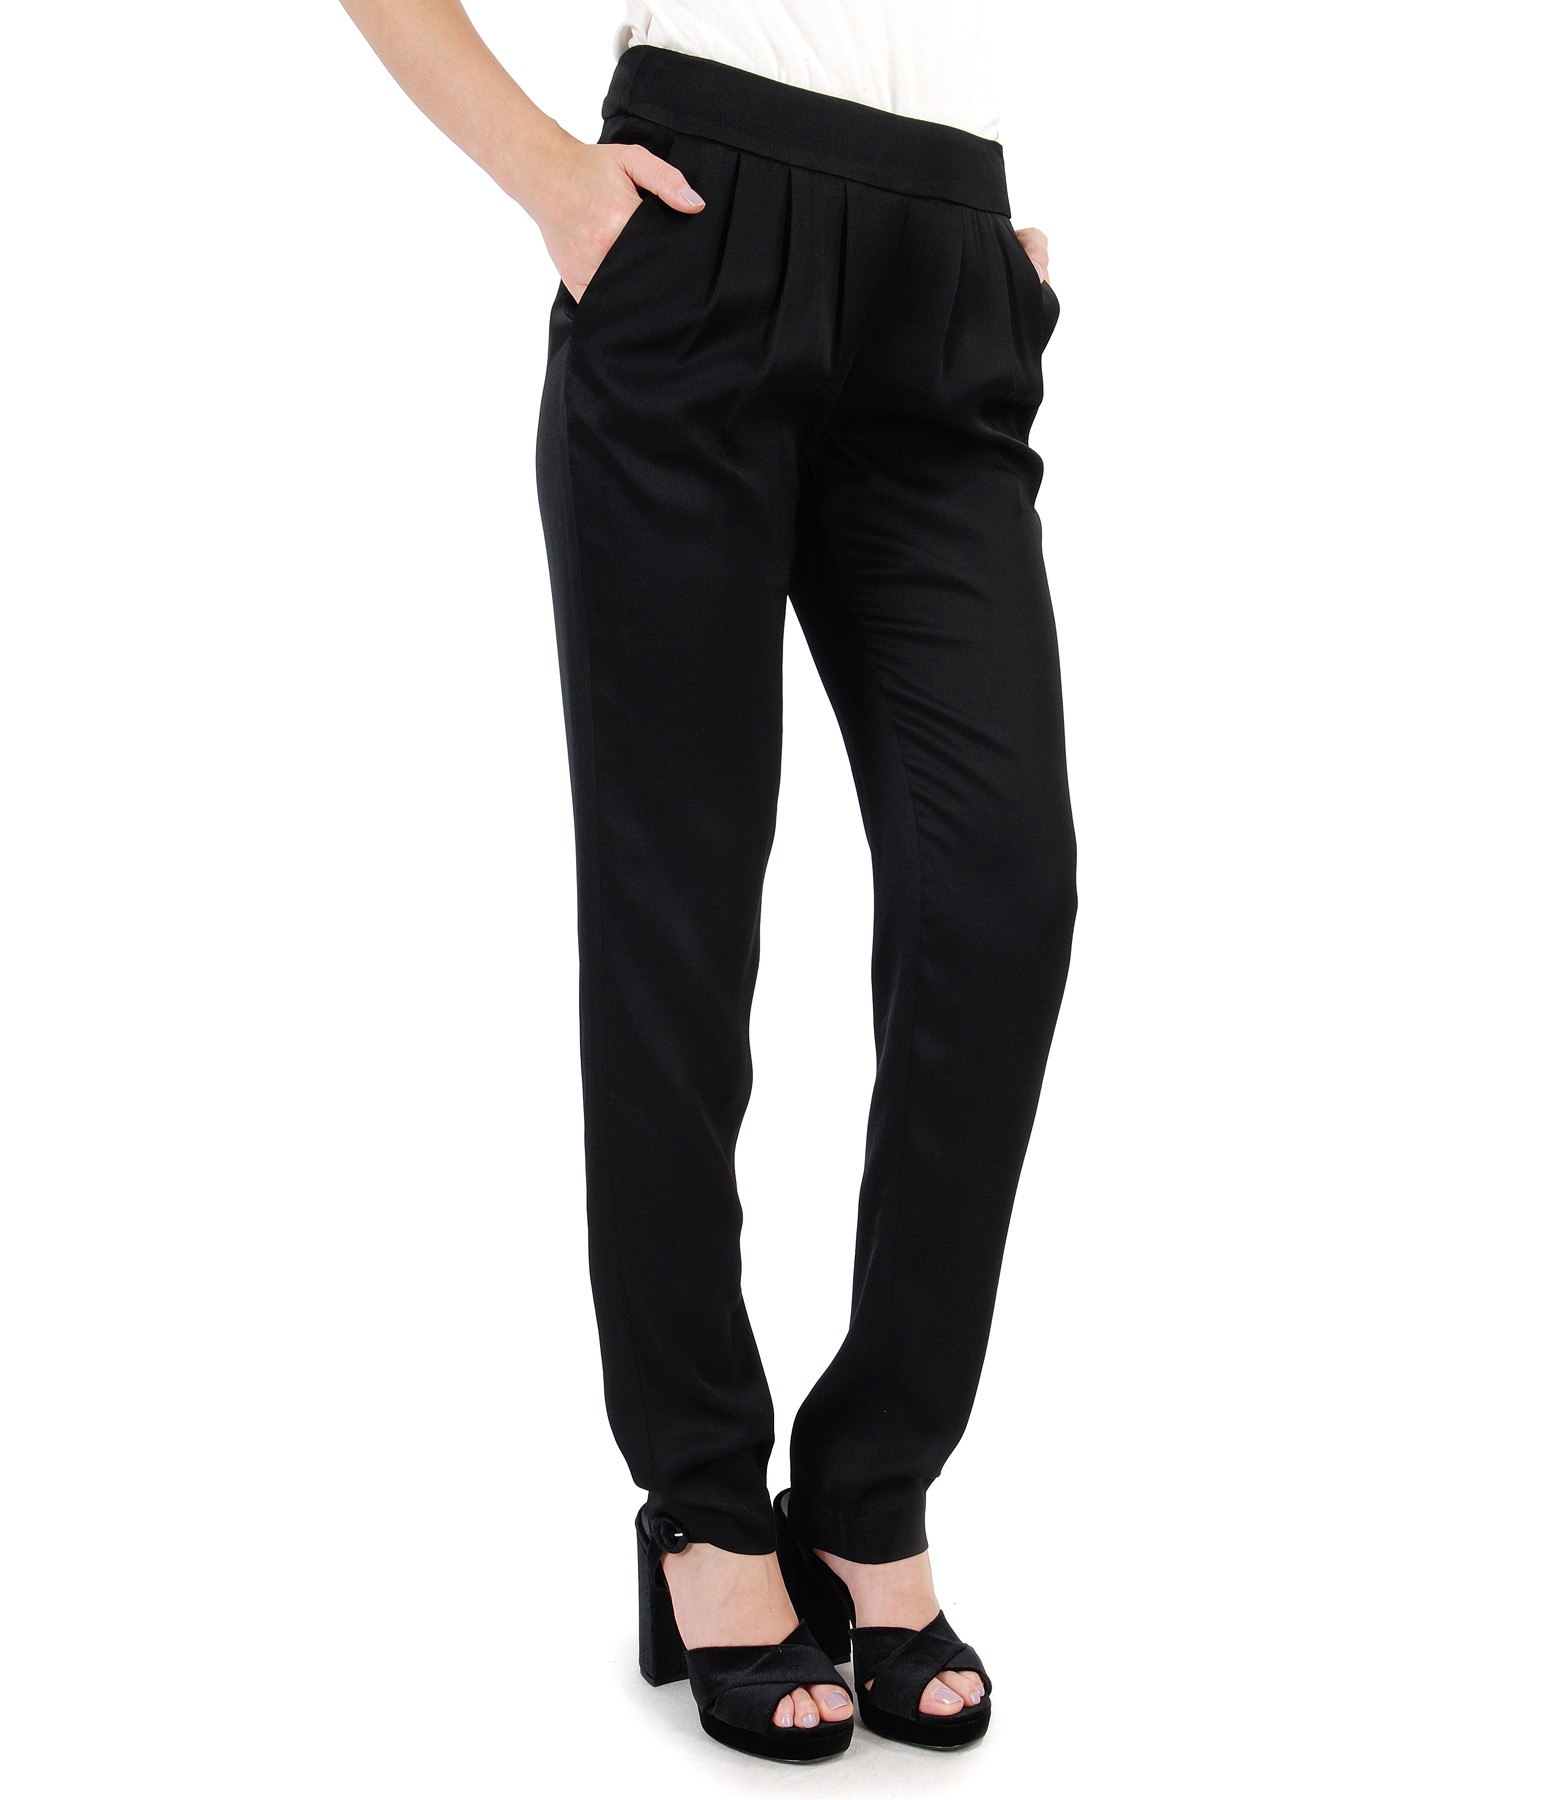 Viscose pants with pockets and folds black - YOKKO